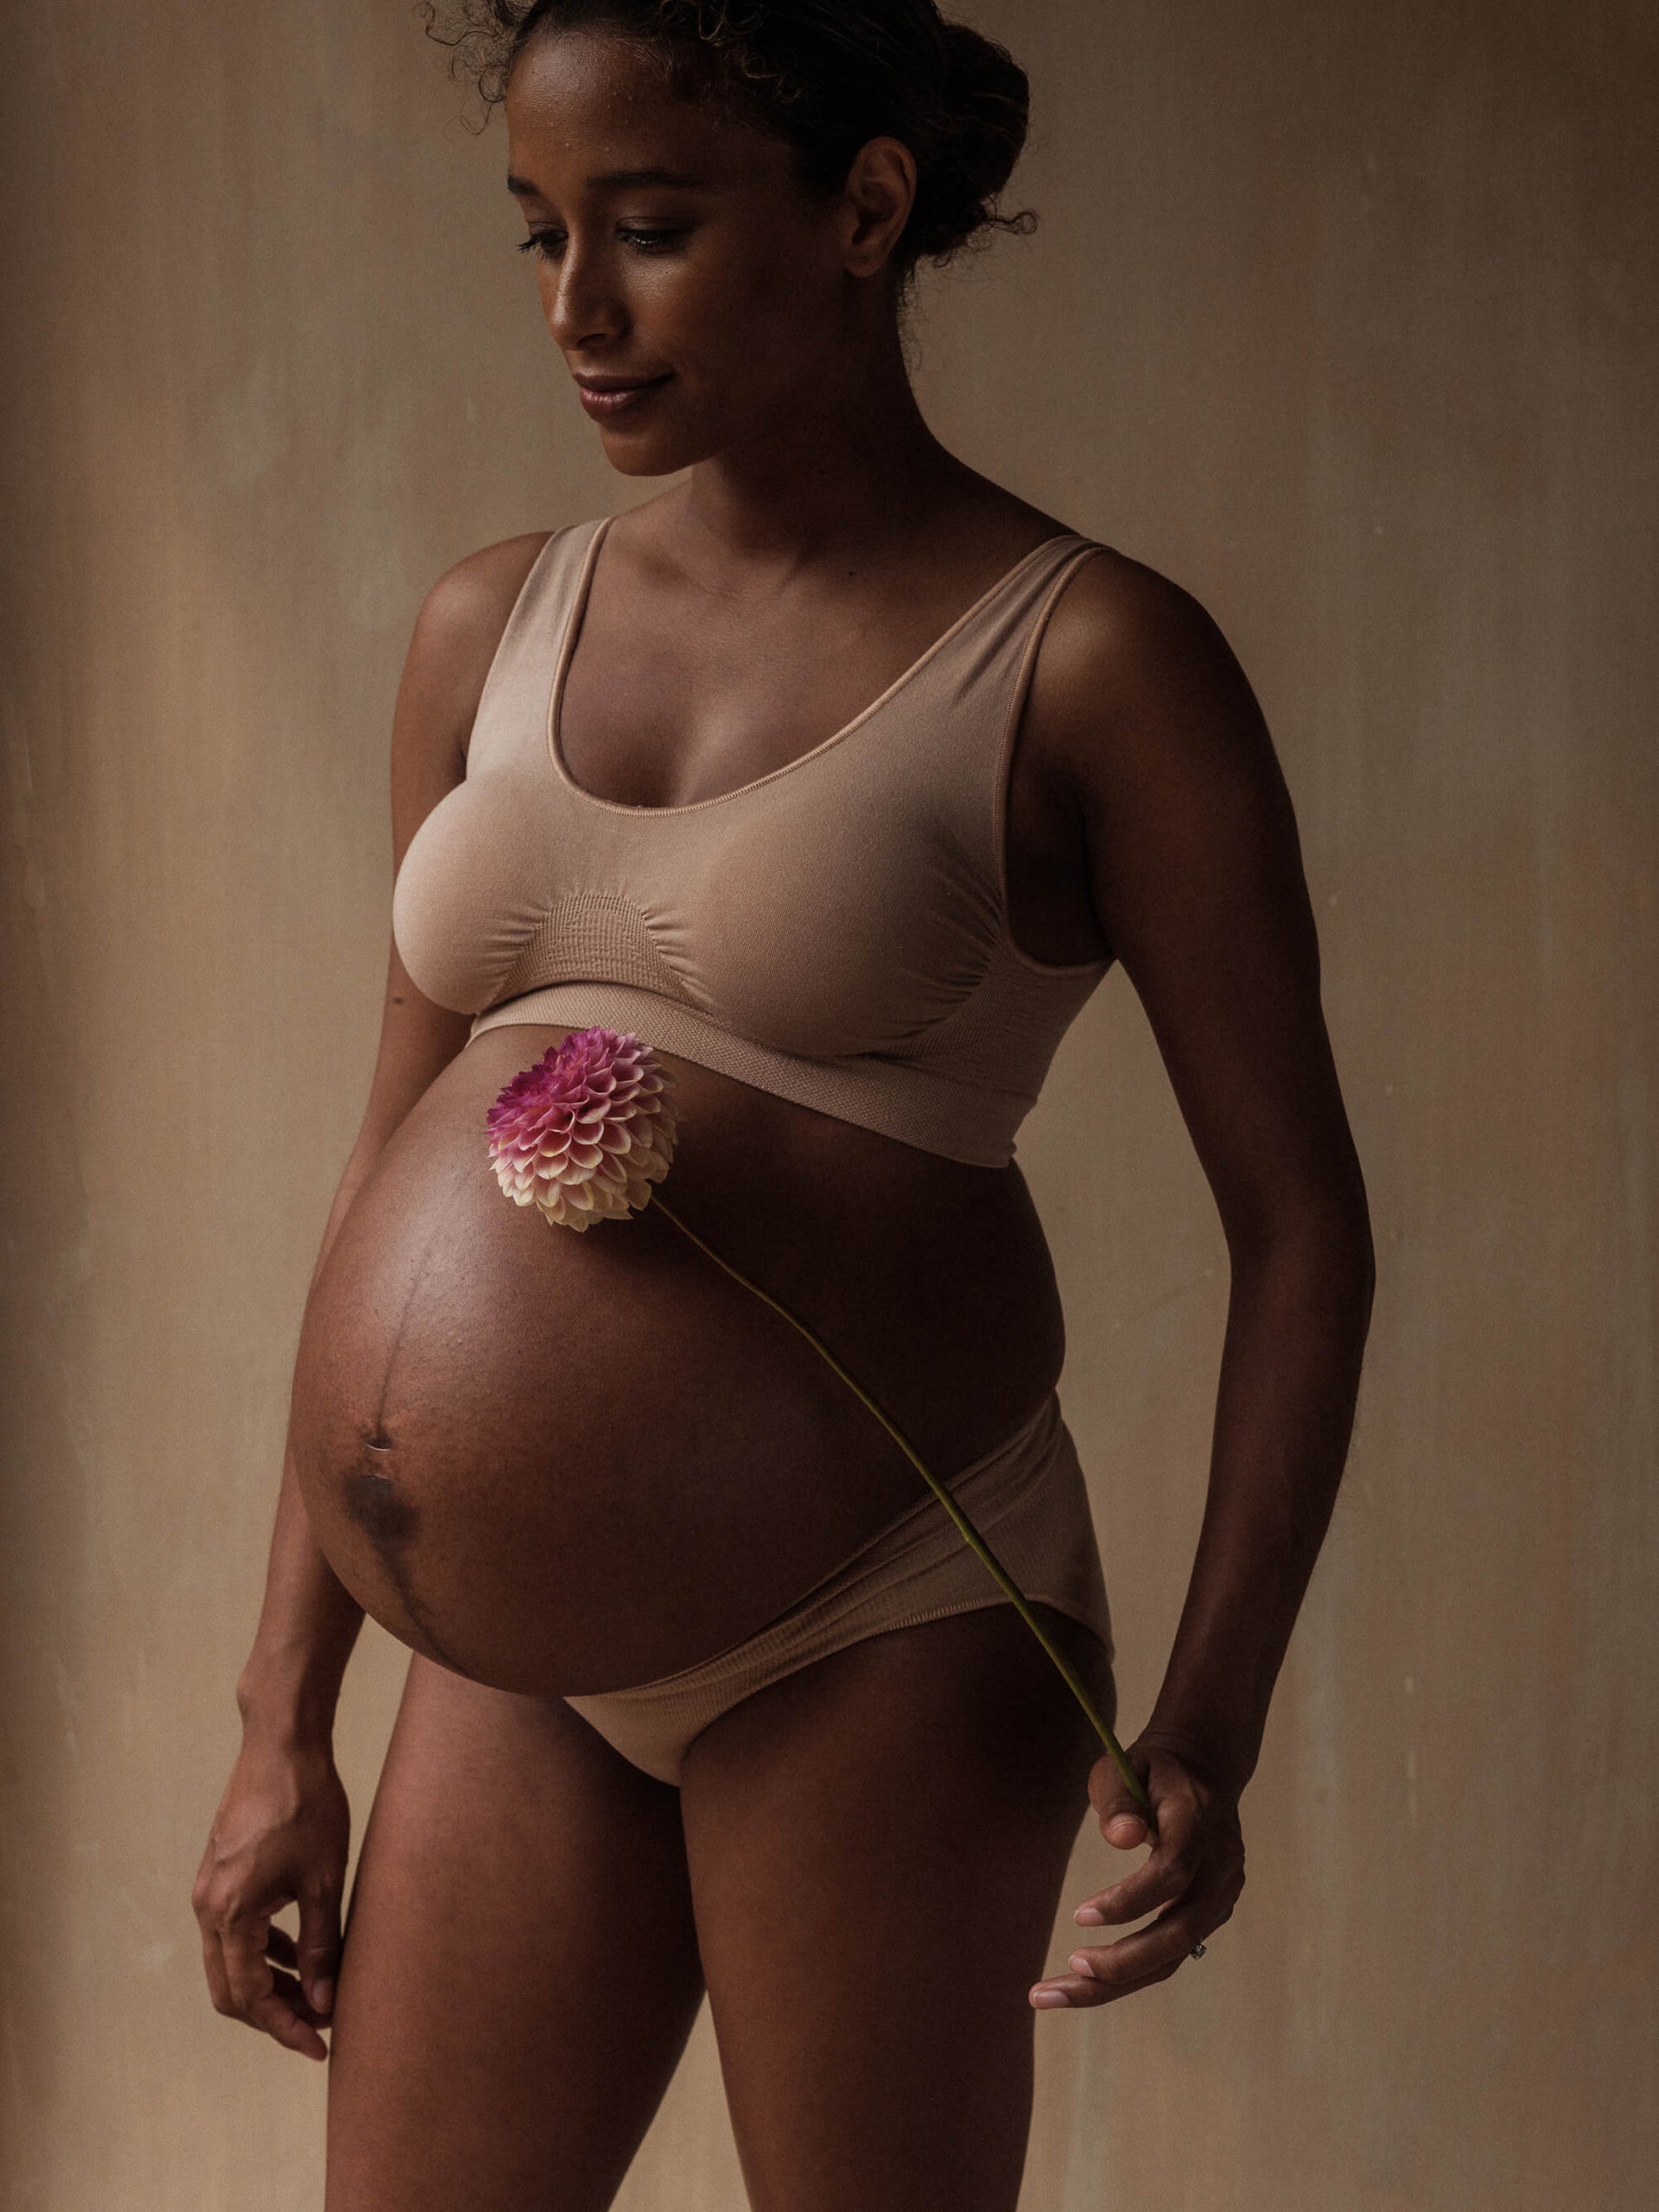 Jorgen House sand colour underwear bra and brief on pregnant female body